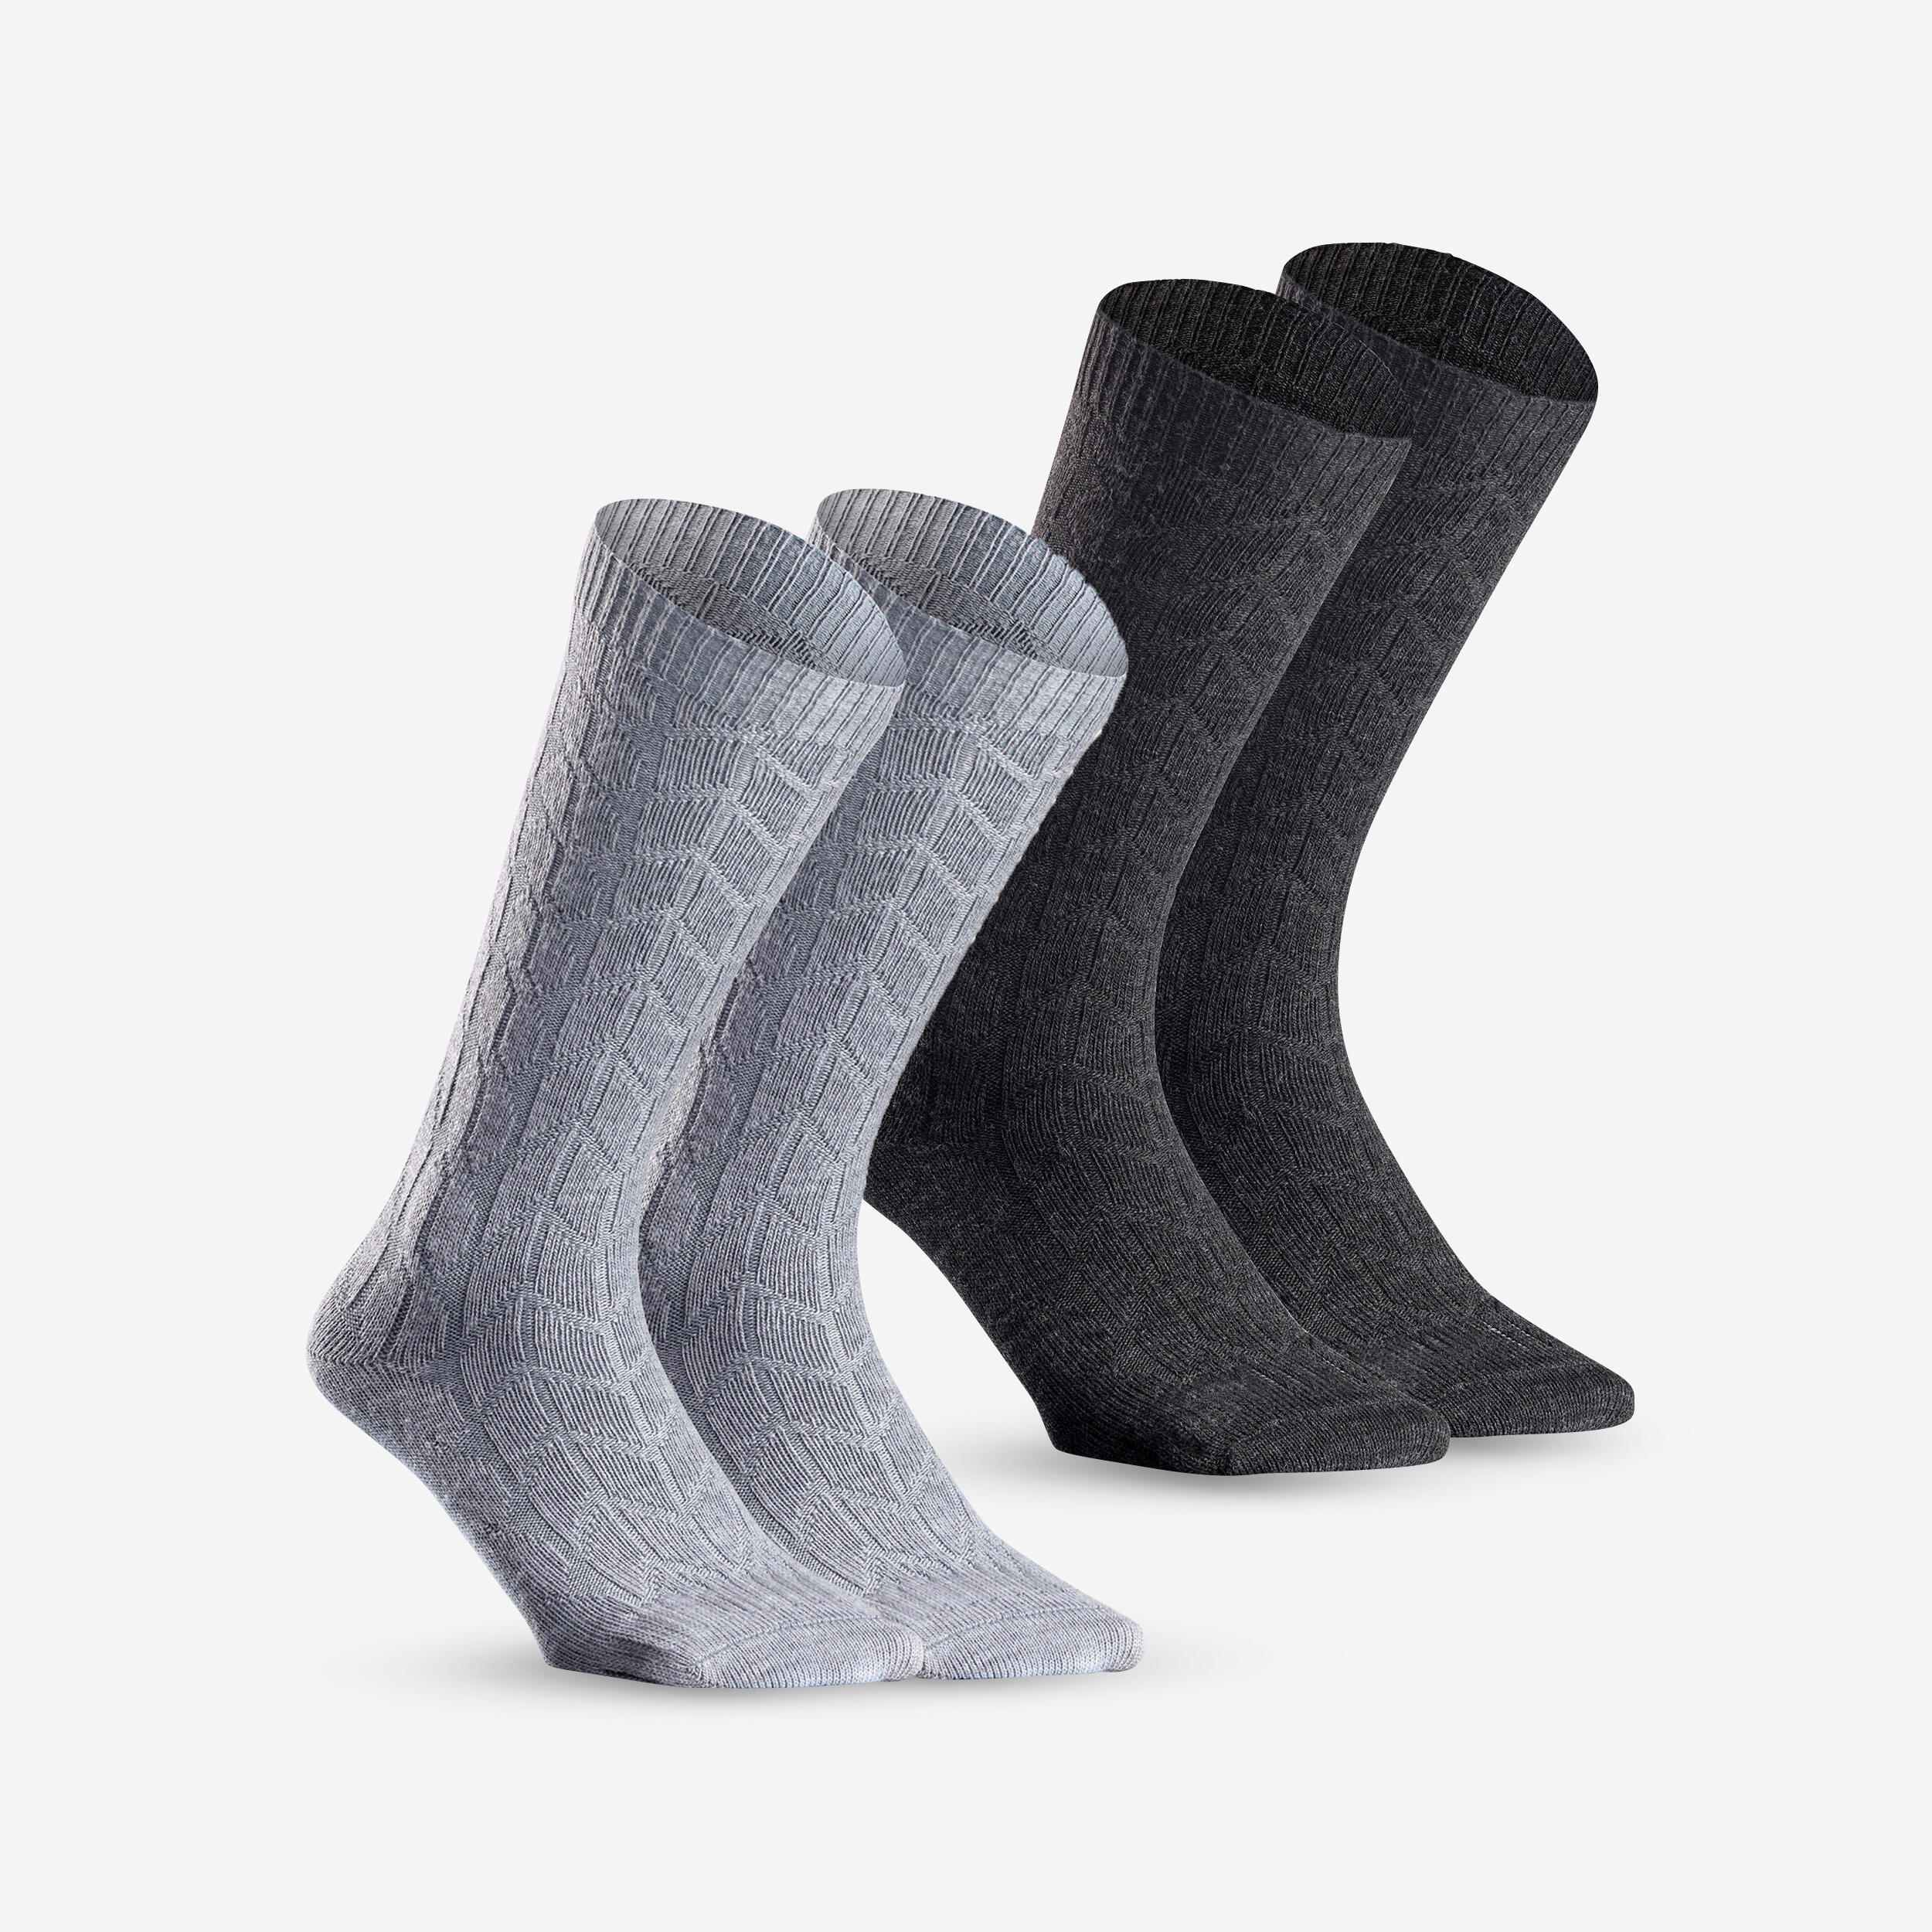 Warm hiking socks - SH100 MID JACQUARD - 2 pairs QUECHUA | Decathlon